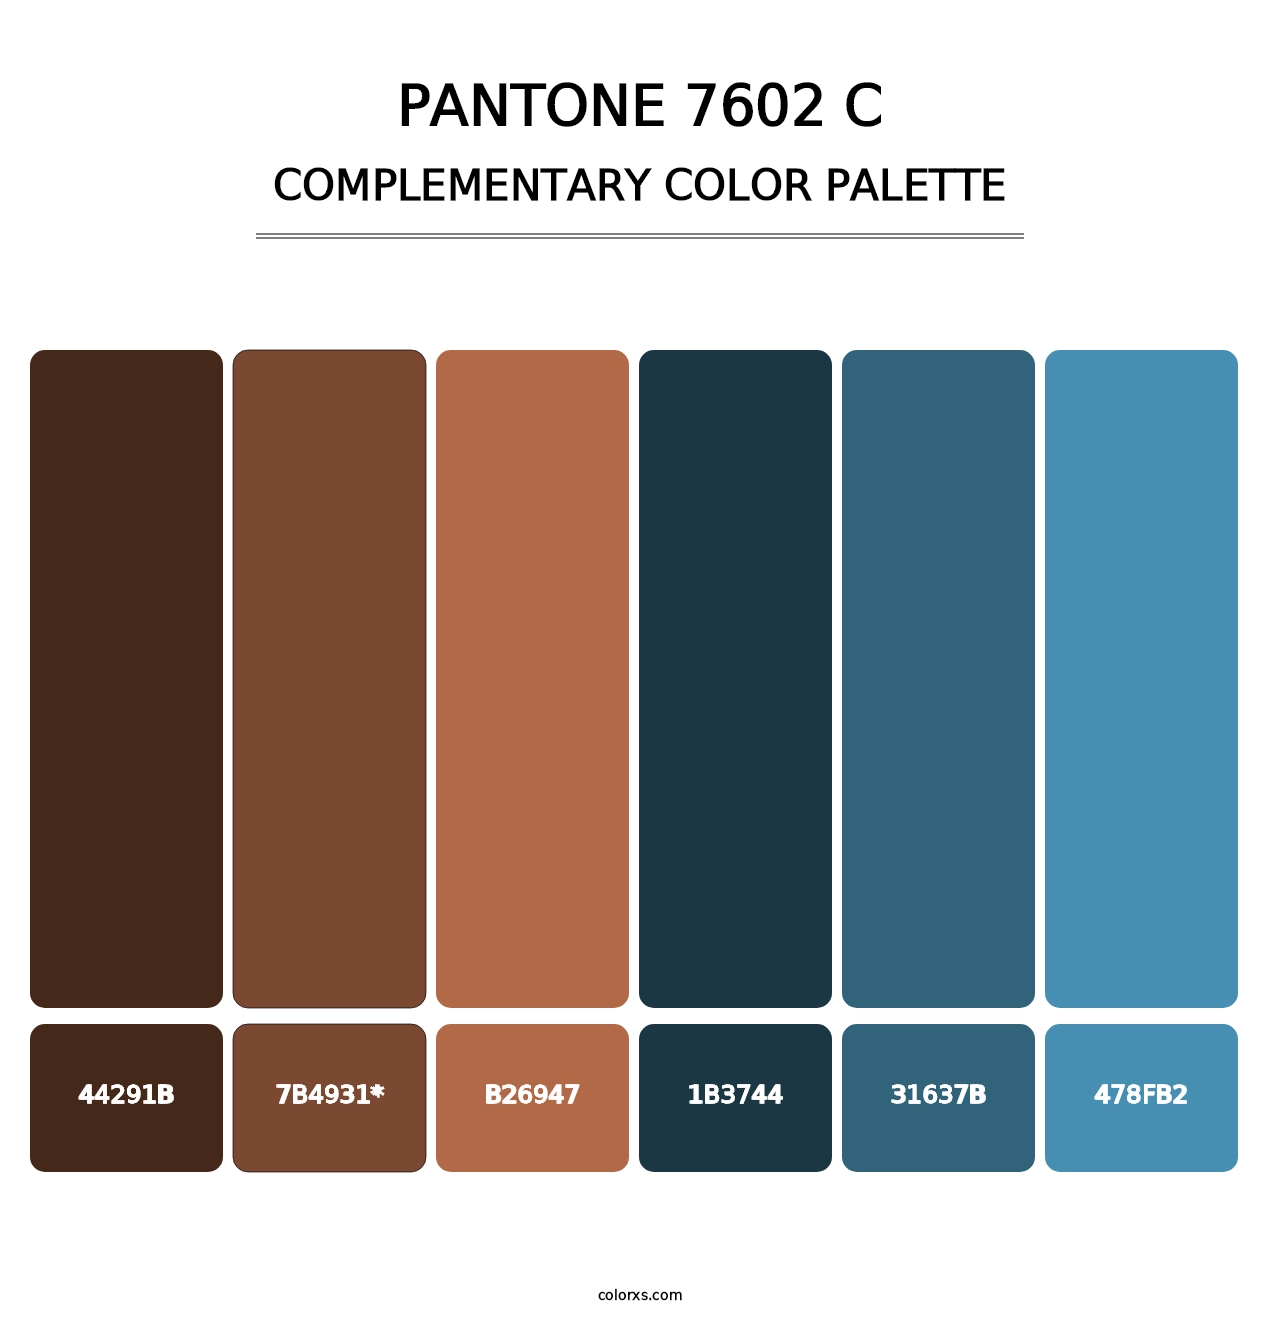 PANTONE 7602 C - Complementary Color Palette